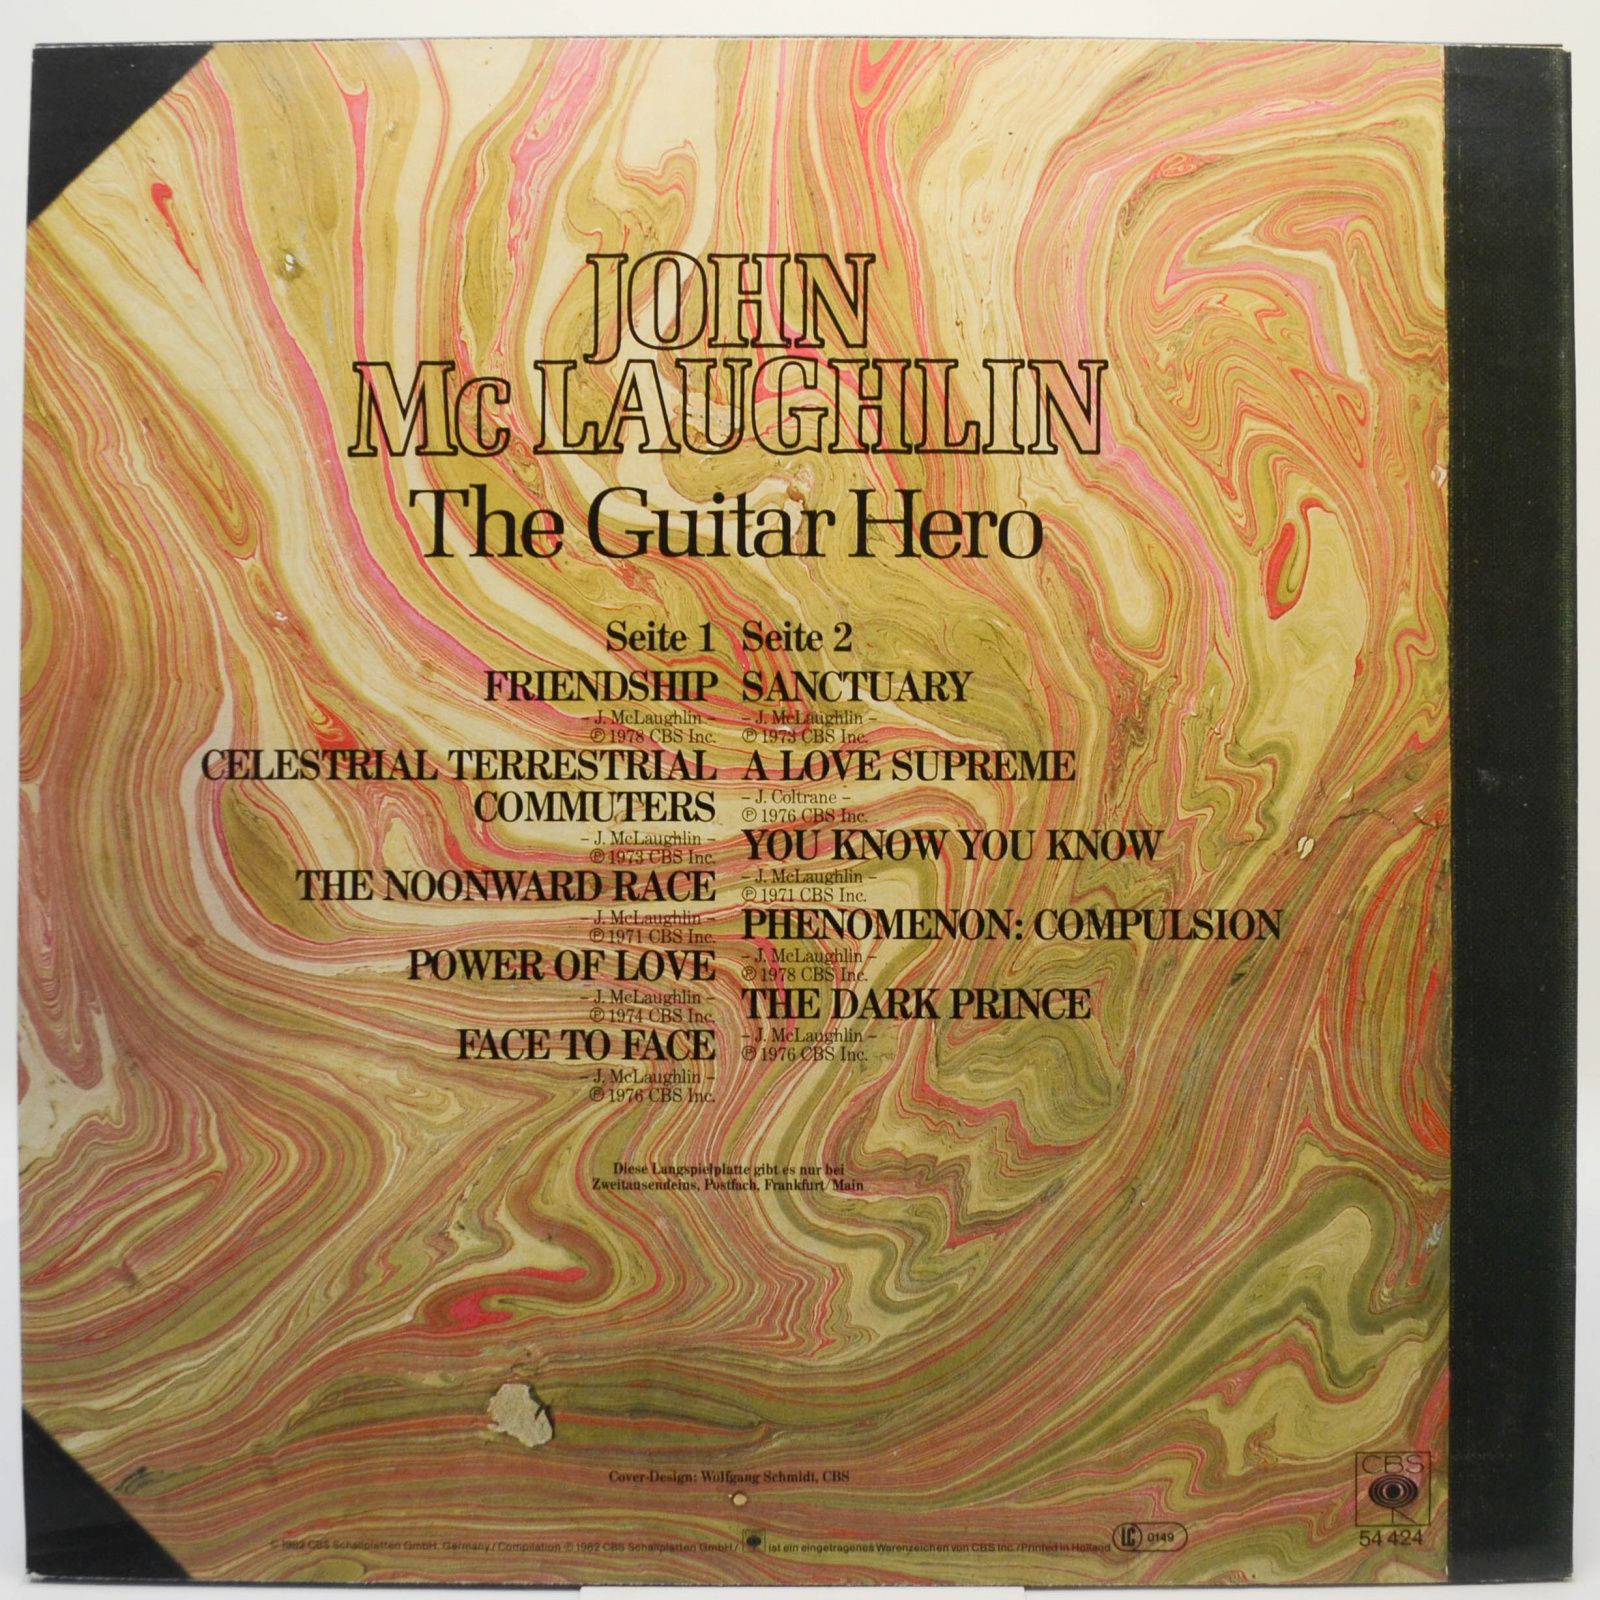 John McLaughlin — The Guitar Hero, 1982